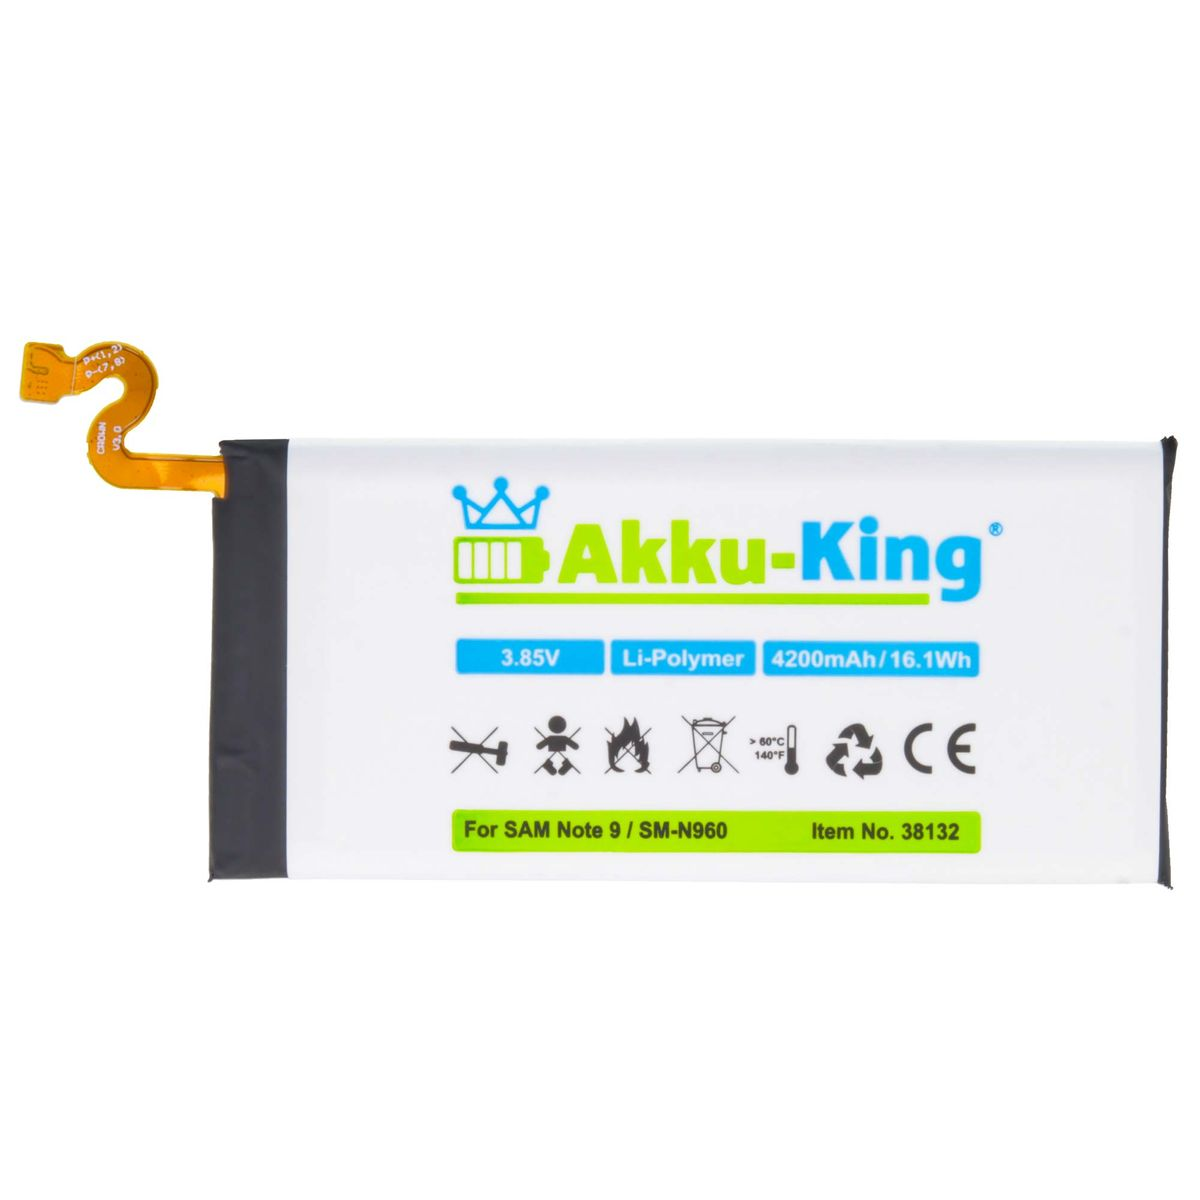 mit Handy-Akku, EB-BN965ABU Volt, Samsung AKKU-KING 4200mAh 3.85 Li-Polymer kompatibel Akku